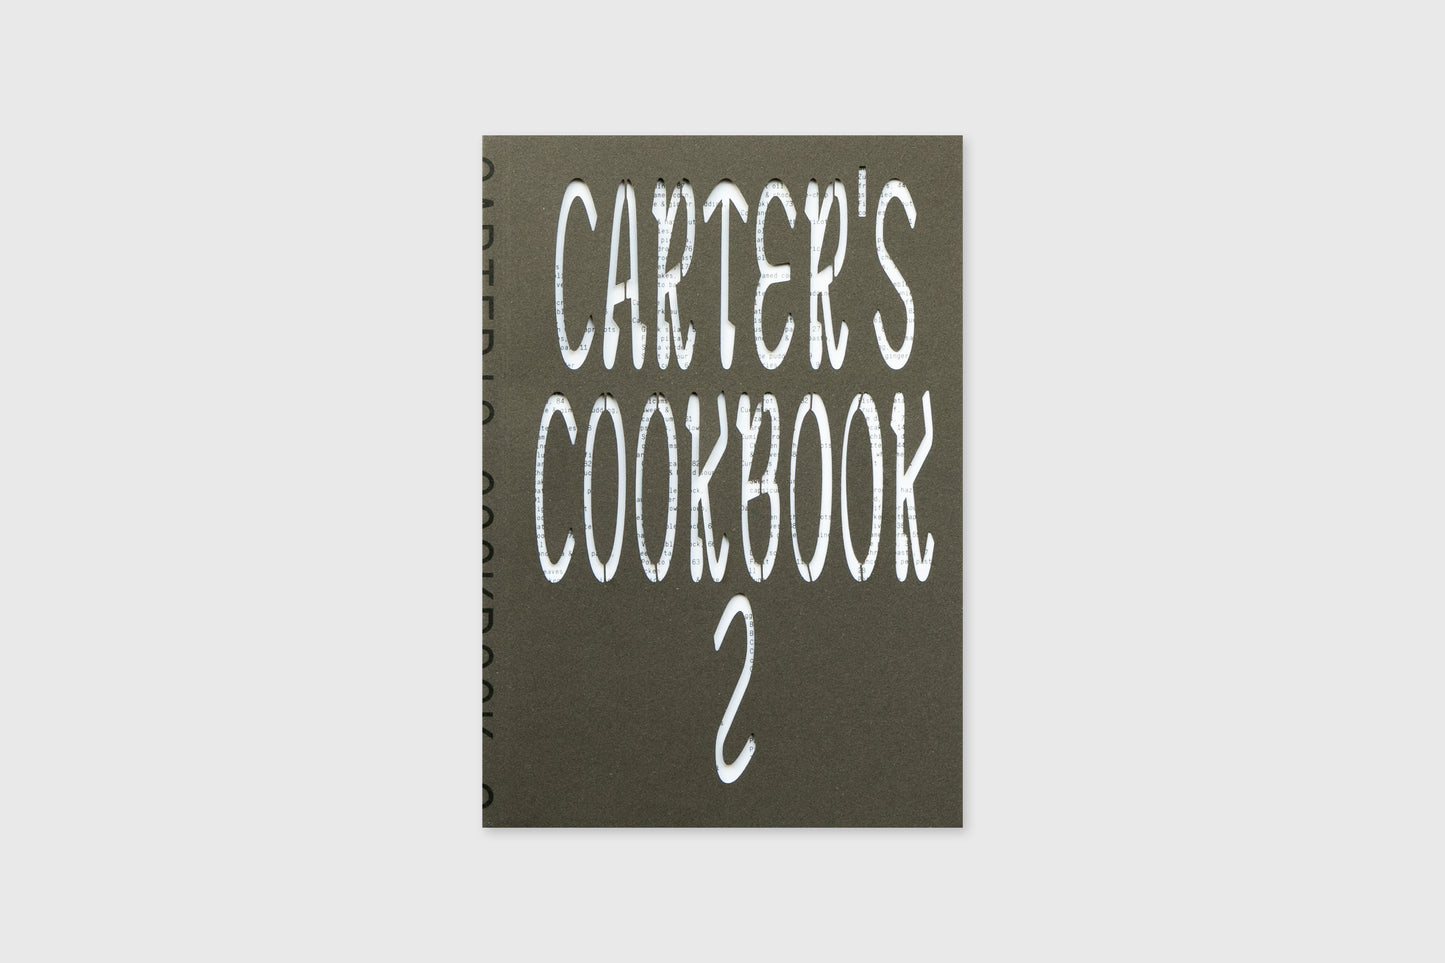 Carter’s Cookbook 2